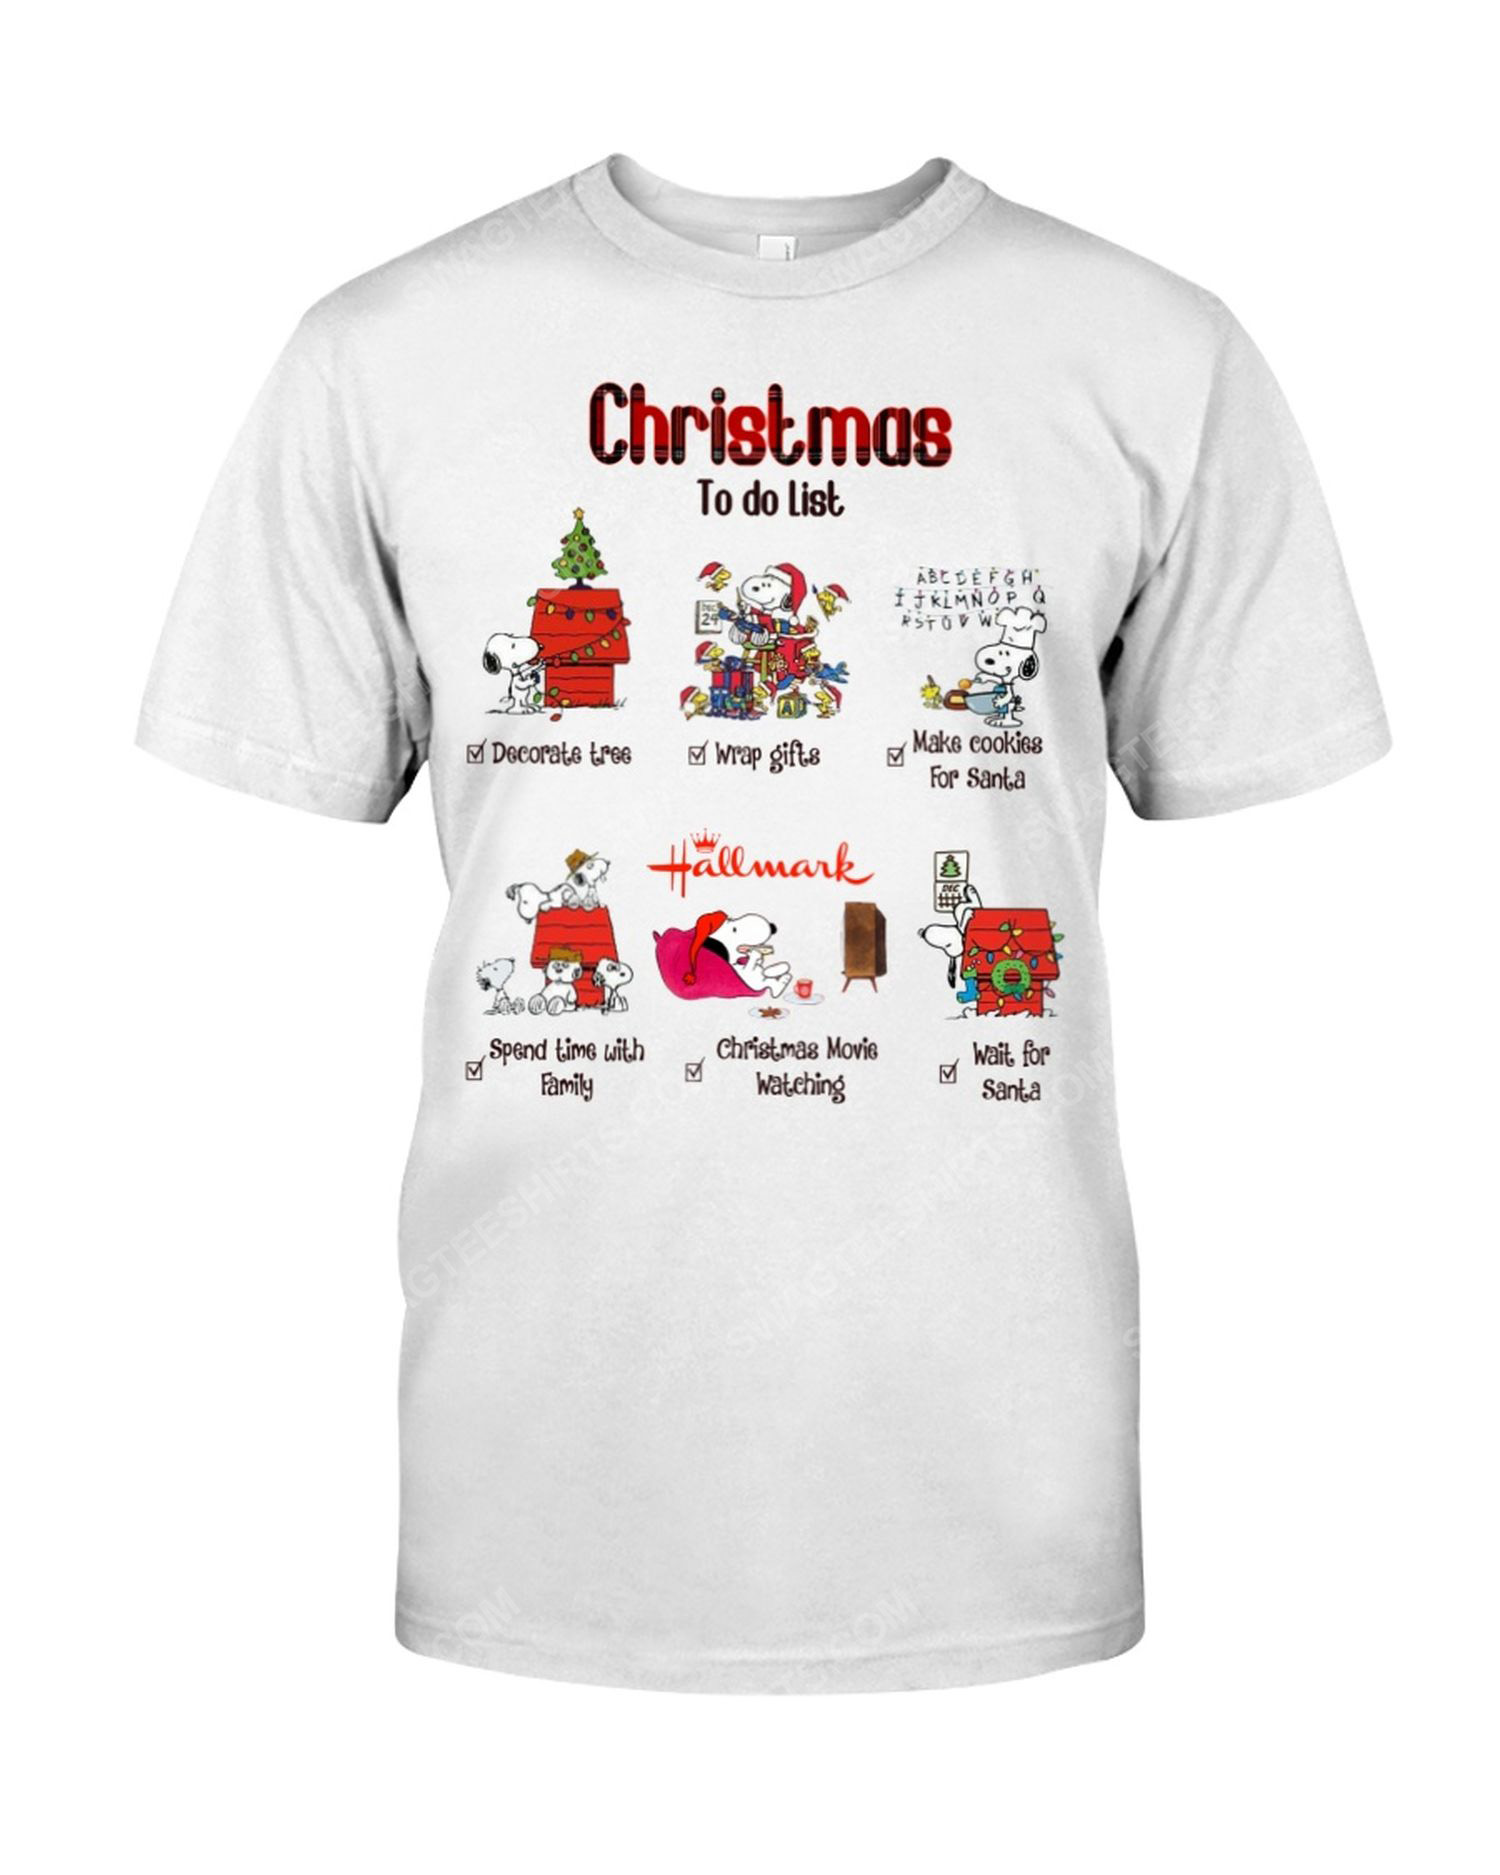 The snoopy christmas to do list hallmark tshirt